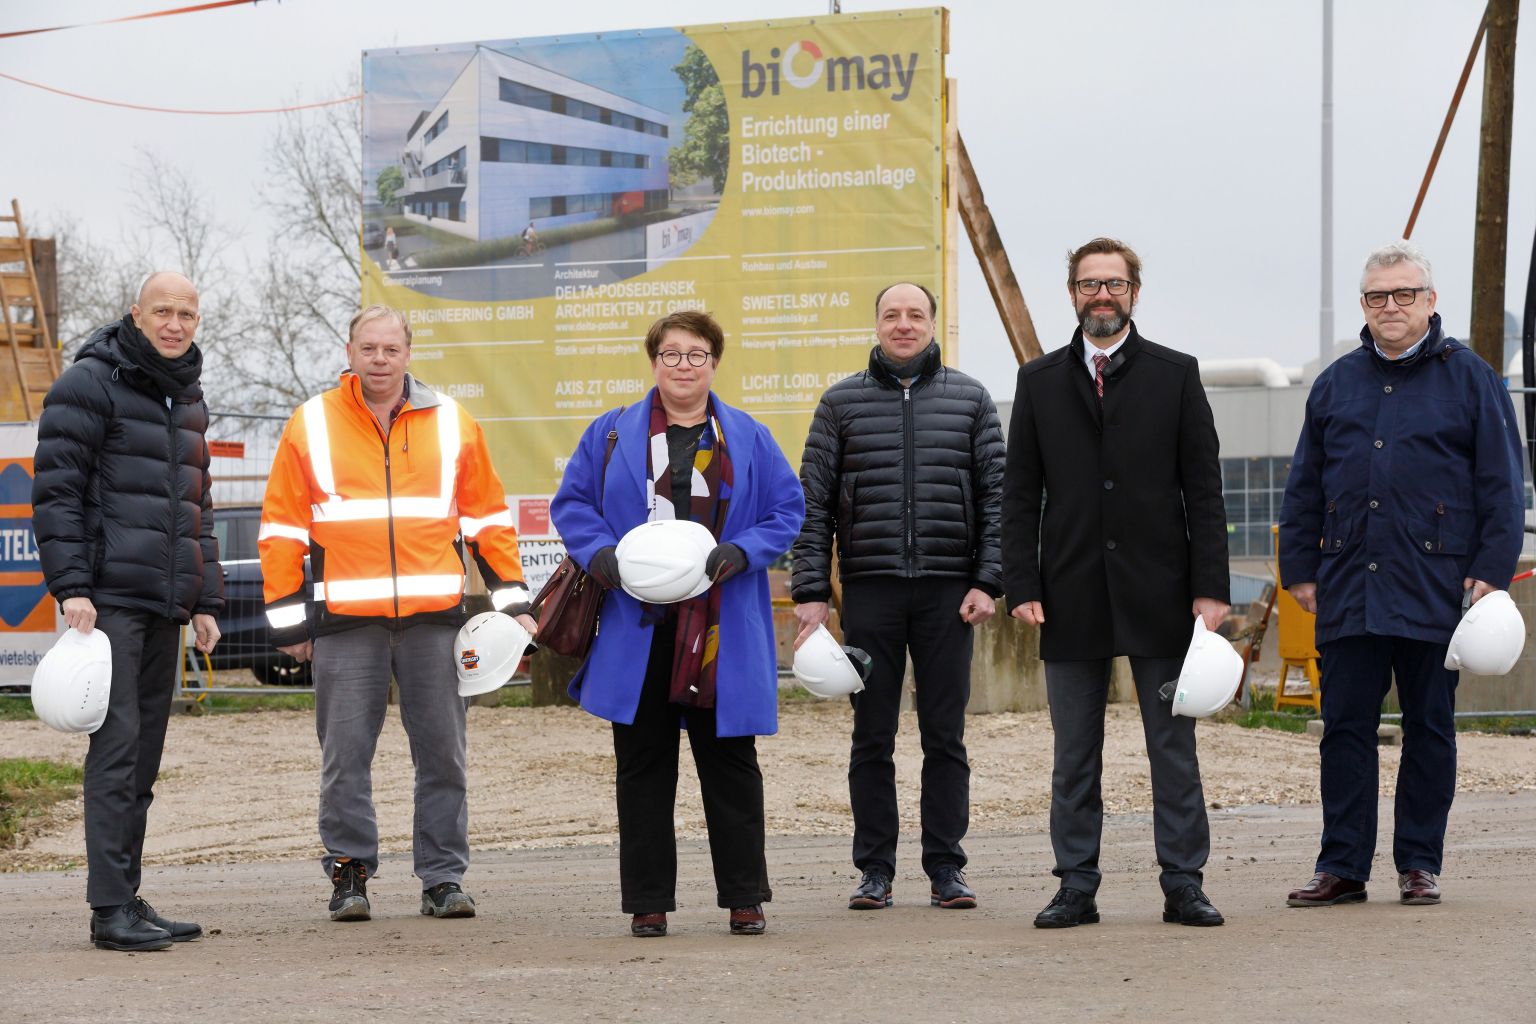 Wiener Biomay AG errichtet neuen Standort in aspern Seestadt